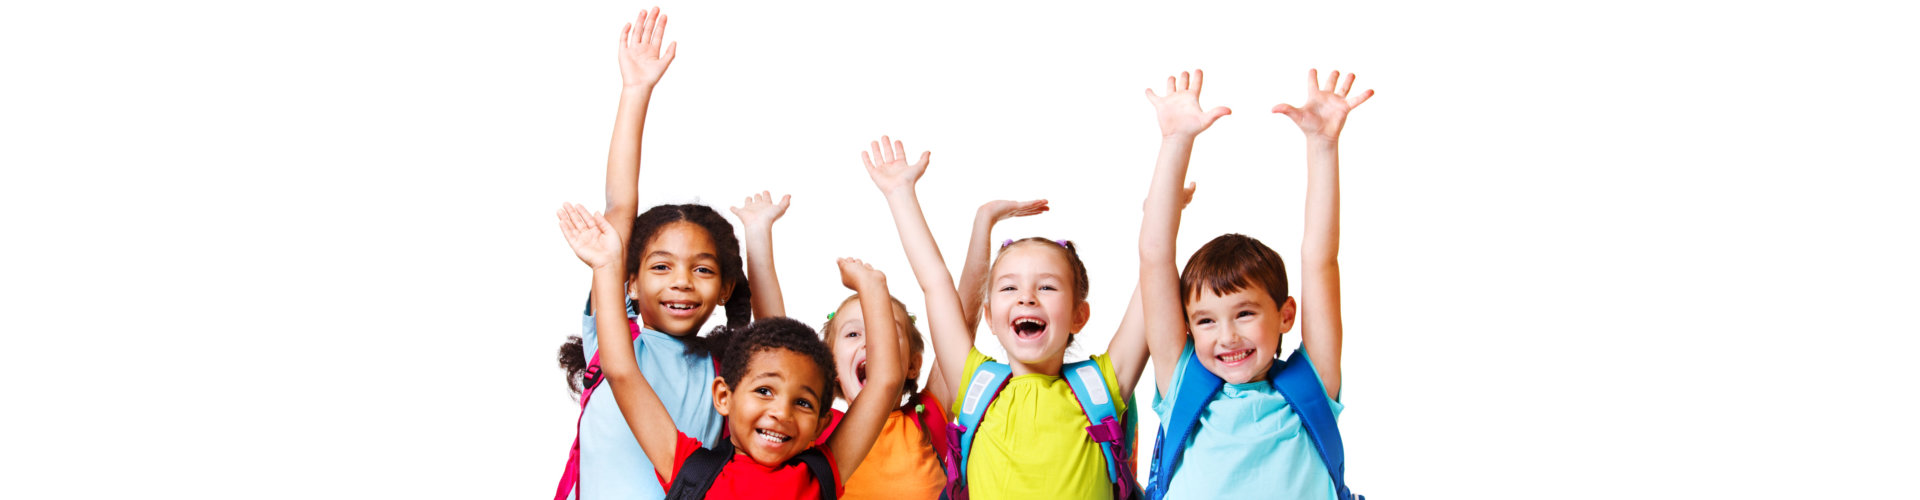 preschoolers raising arms in happiness